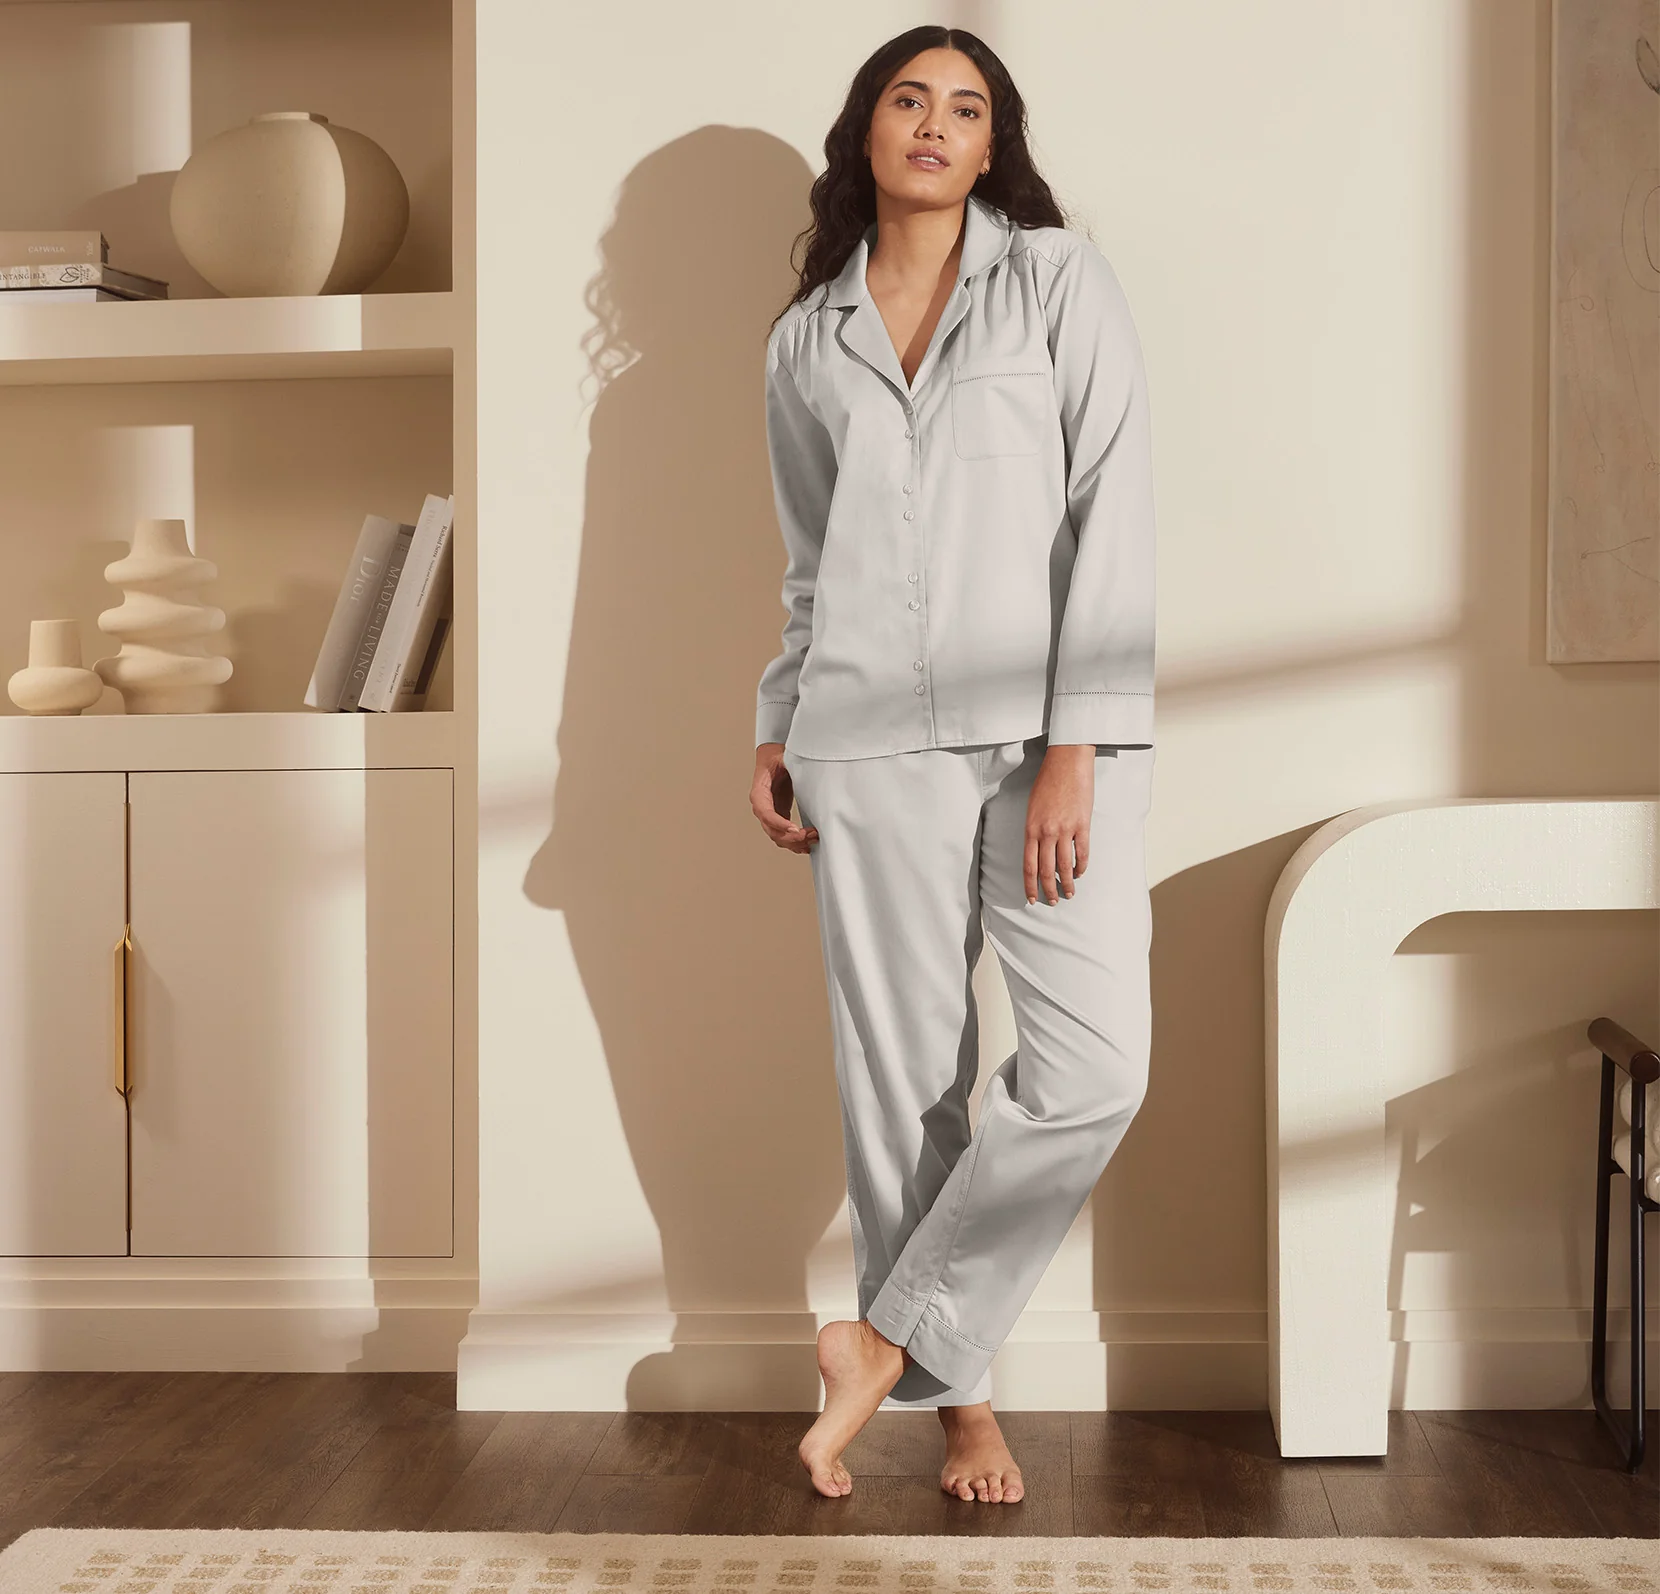 “The Perfect Night’s Rest: Choosing the Right Sleepwear Fabrics”